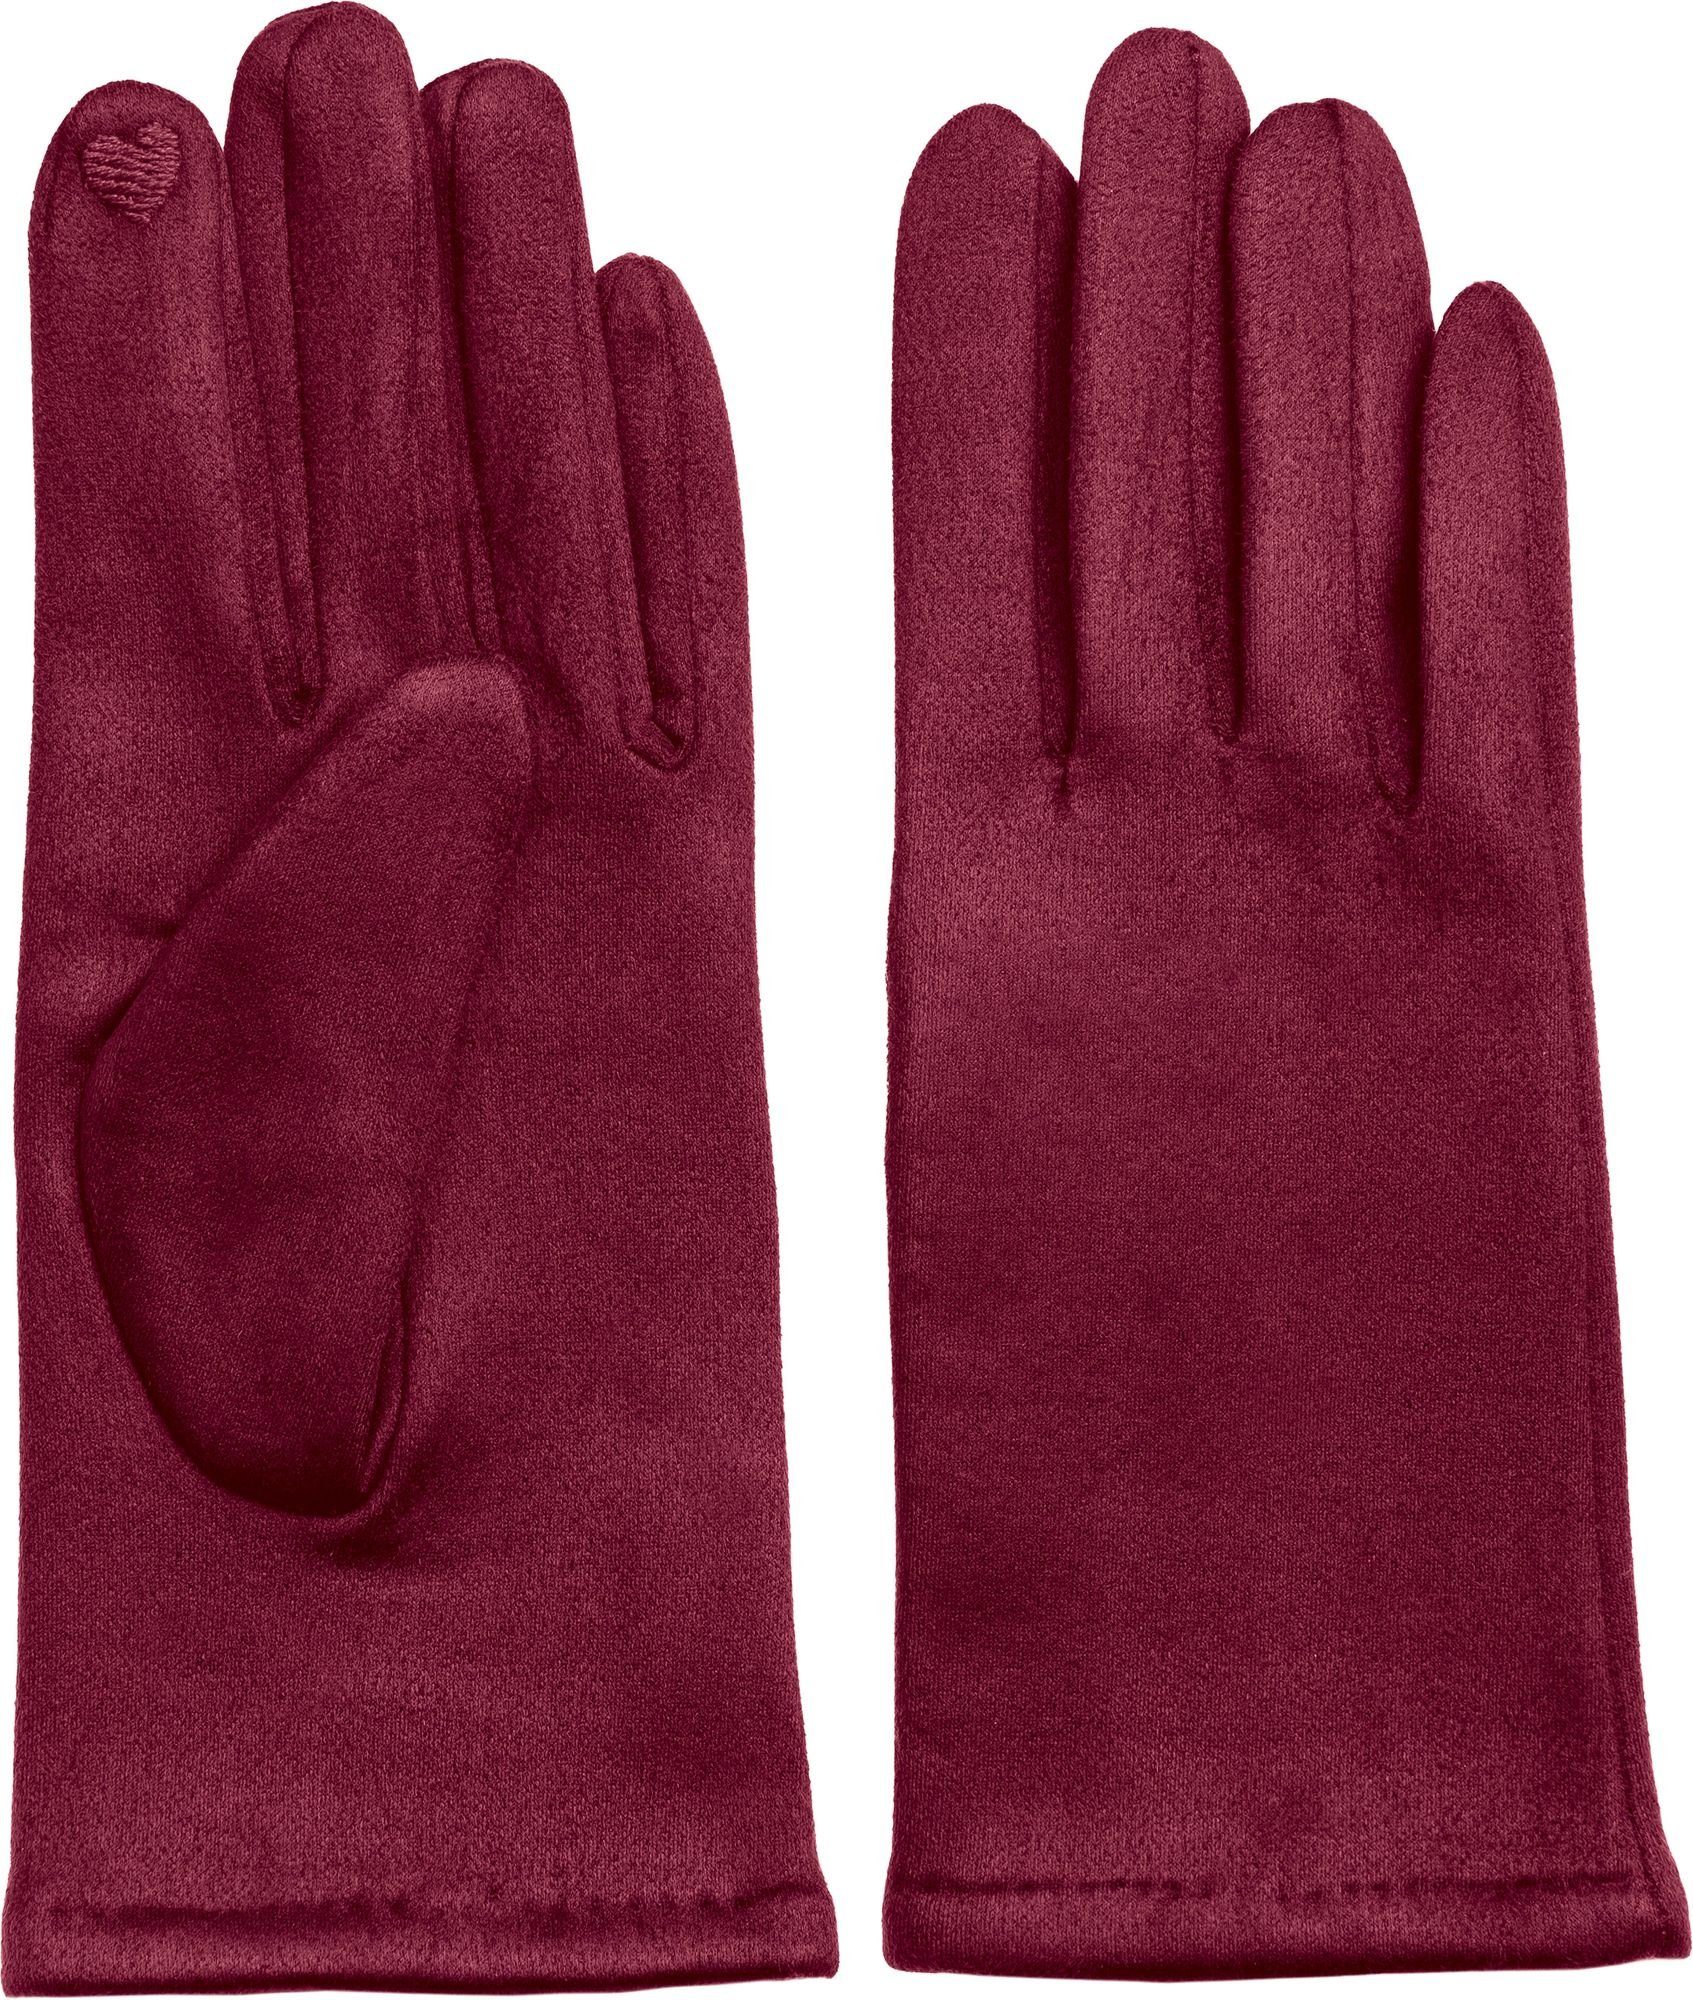 Caspar Strickhandschuhe GLV013 klassisch elegante Winter Damen uni weinrot Handschuhe